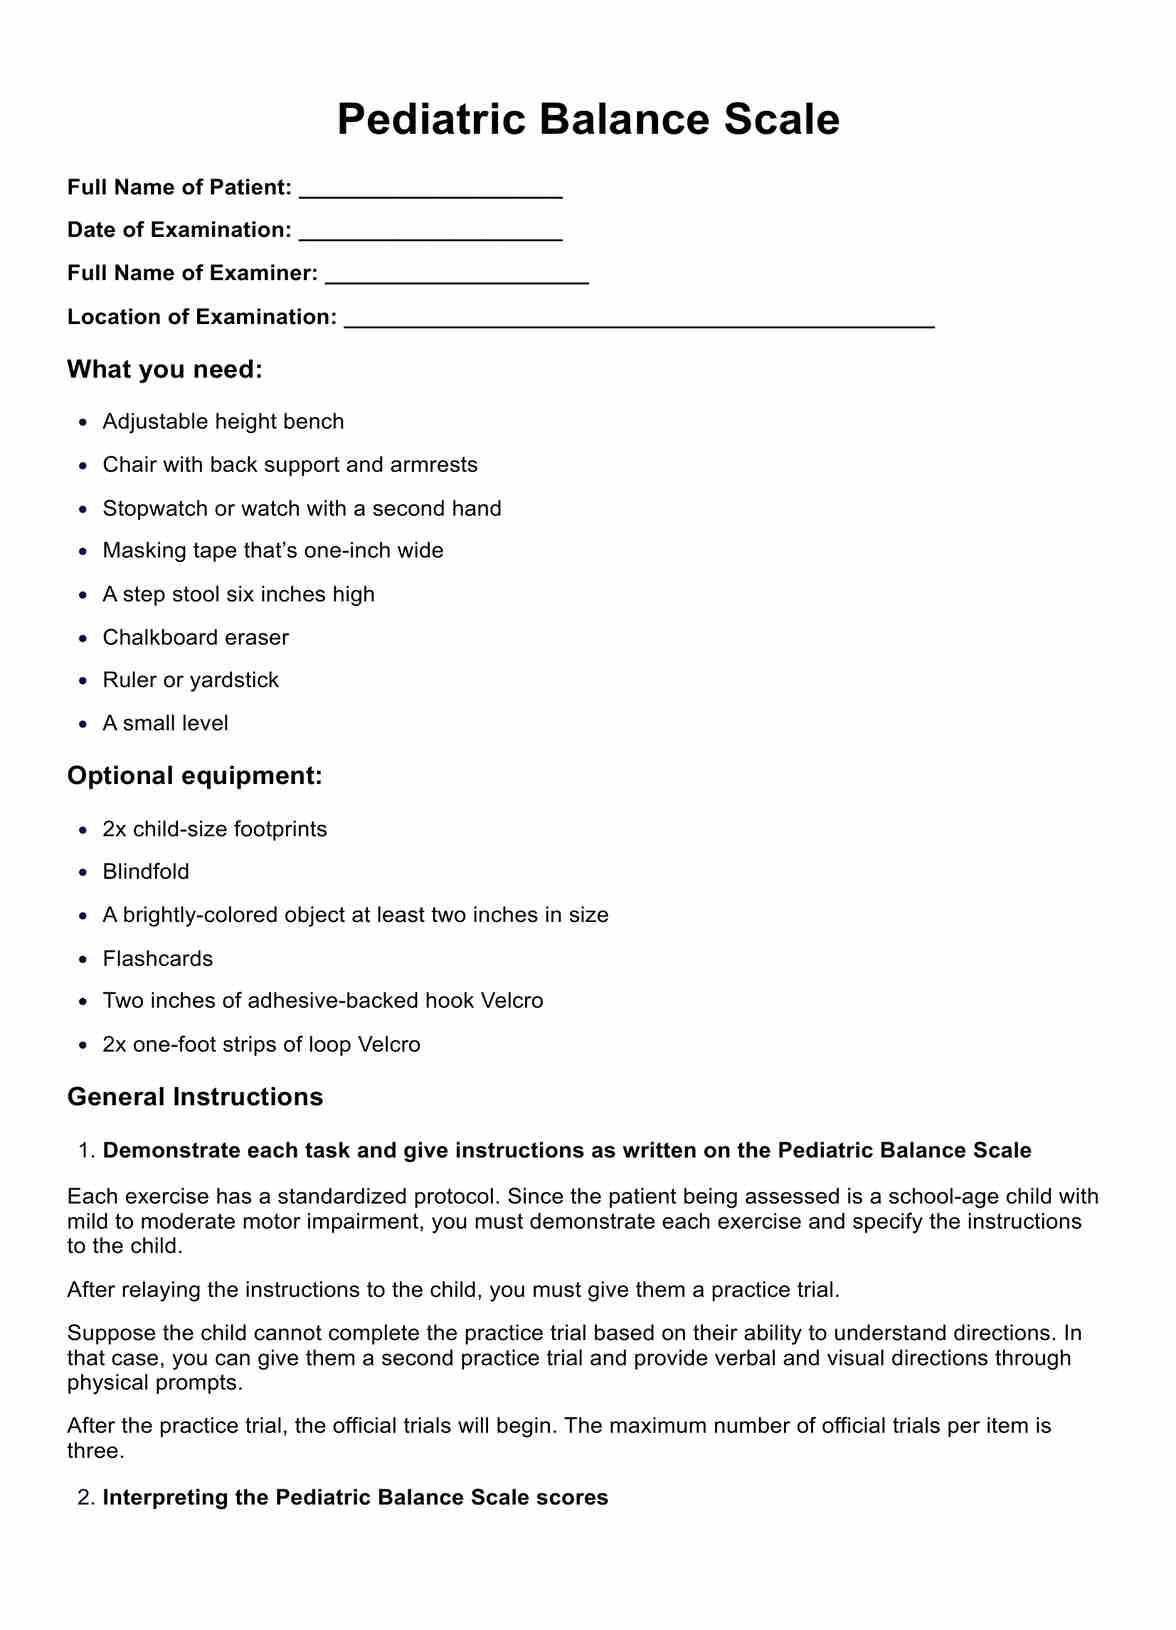 Pediatric Balance Scale PDF Example